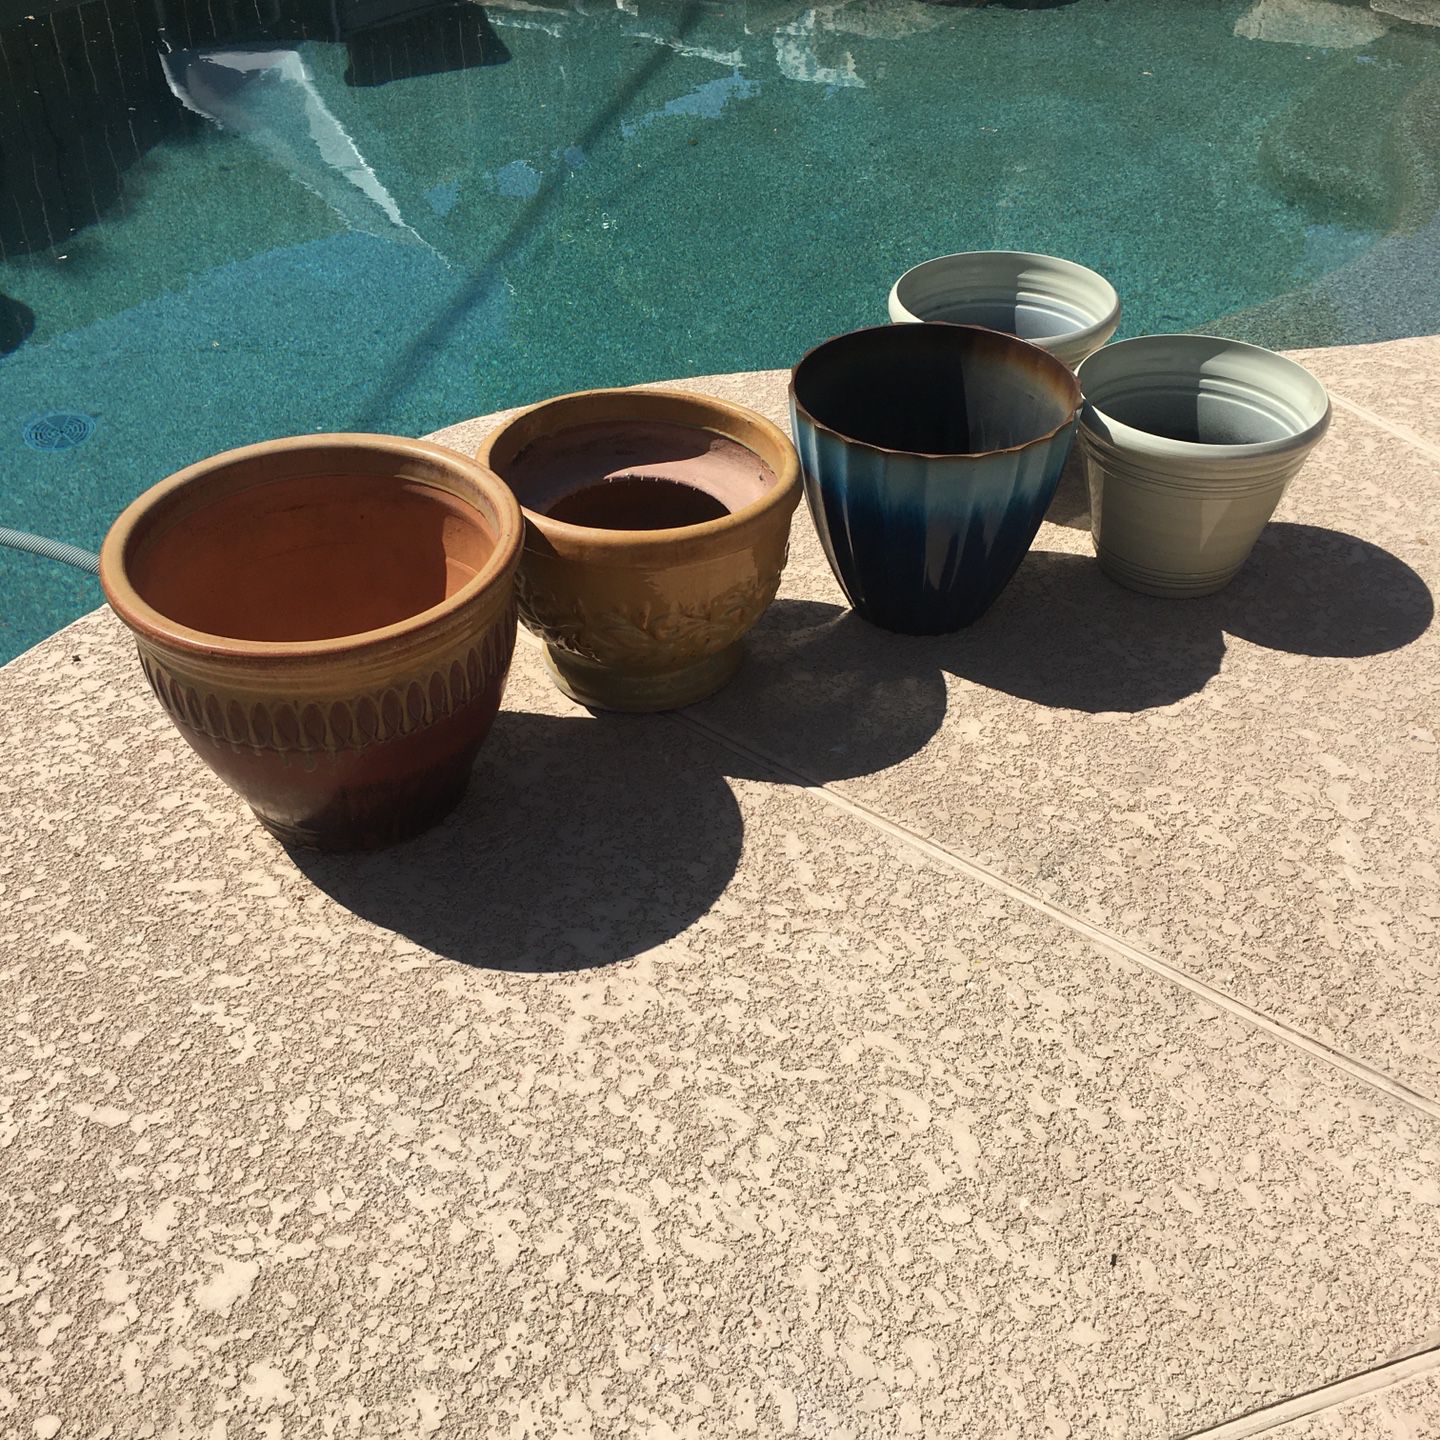 Outdoor Planters/Pots - 5 Total